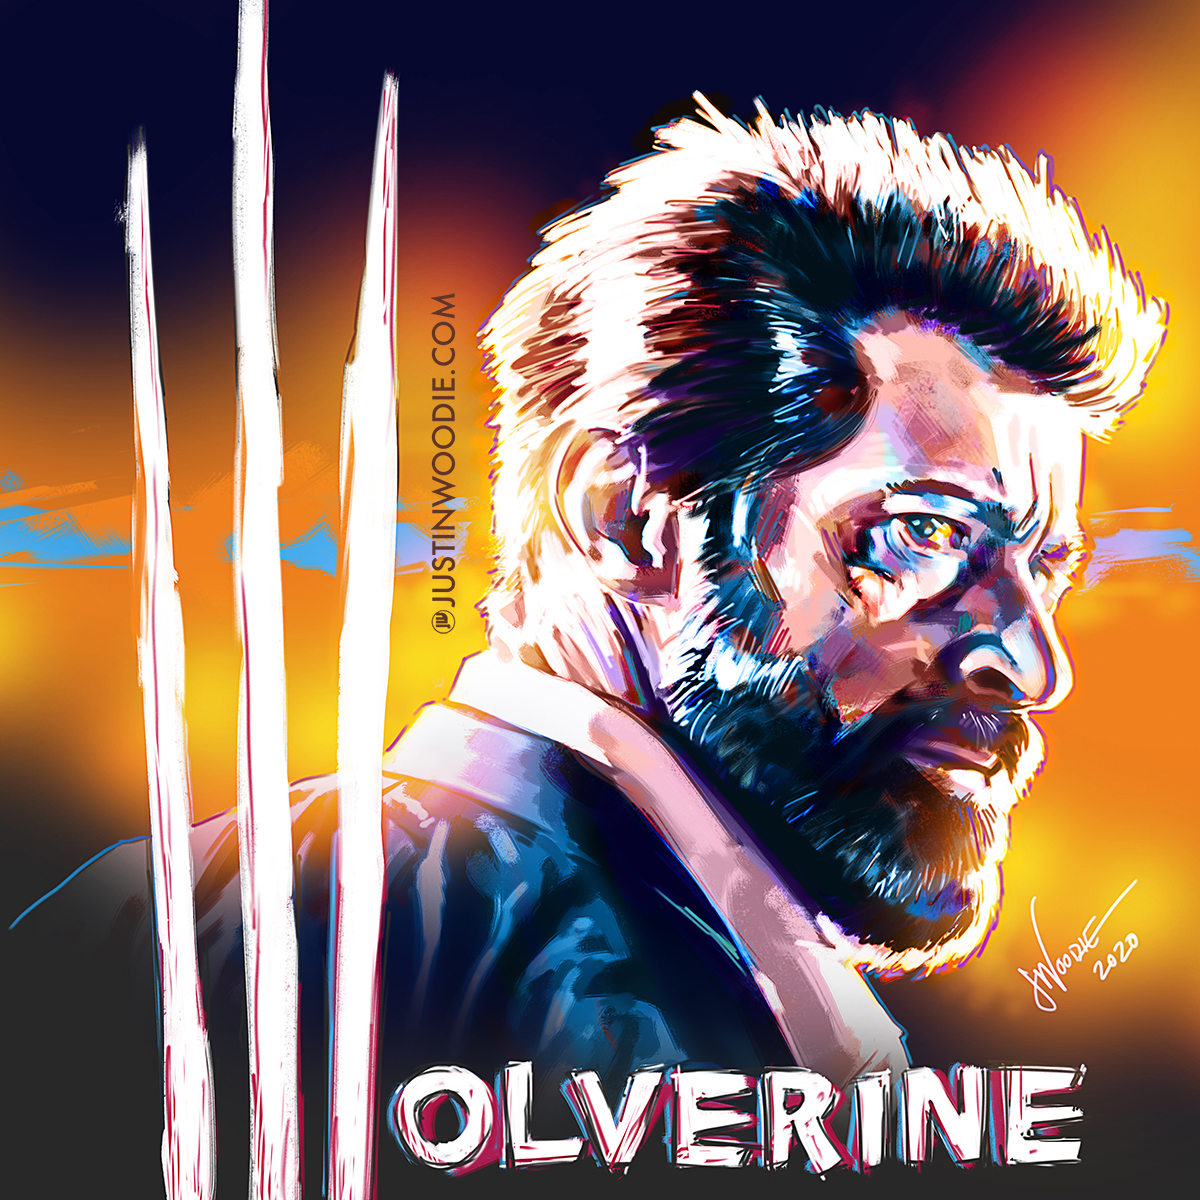 Hugh Jackman as Wolverine Logan Digital Illustration